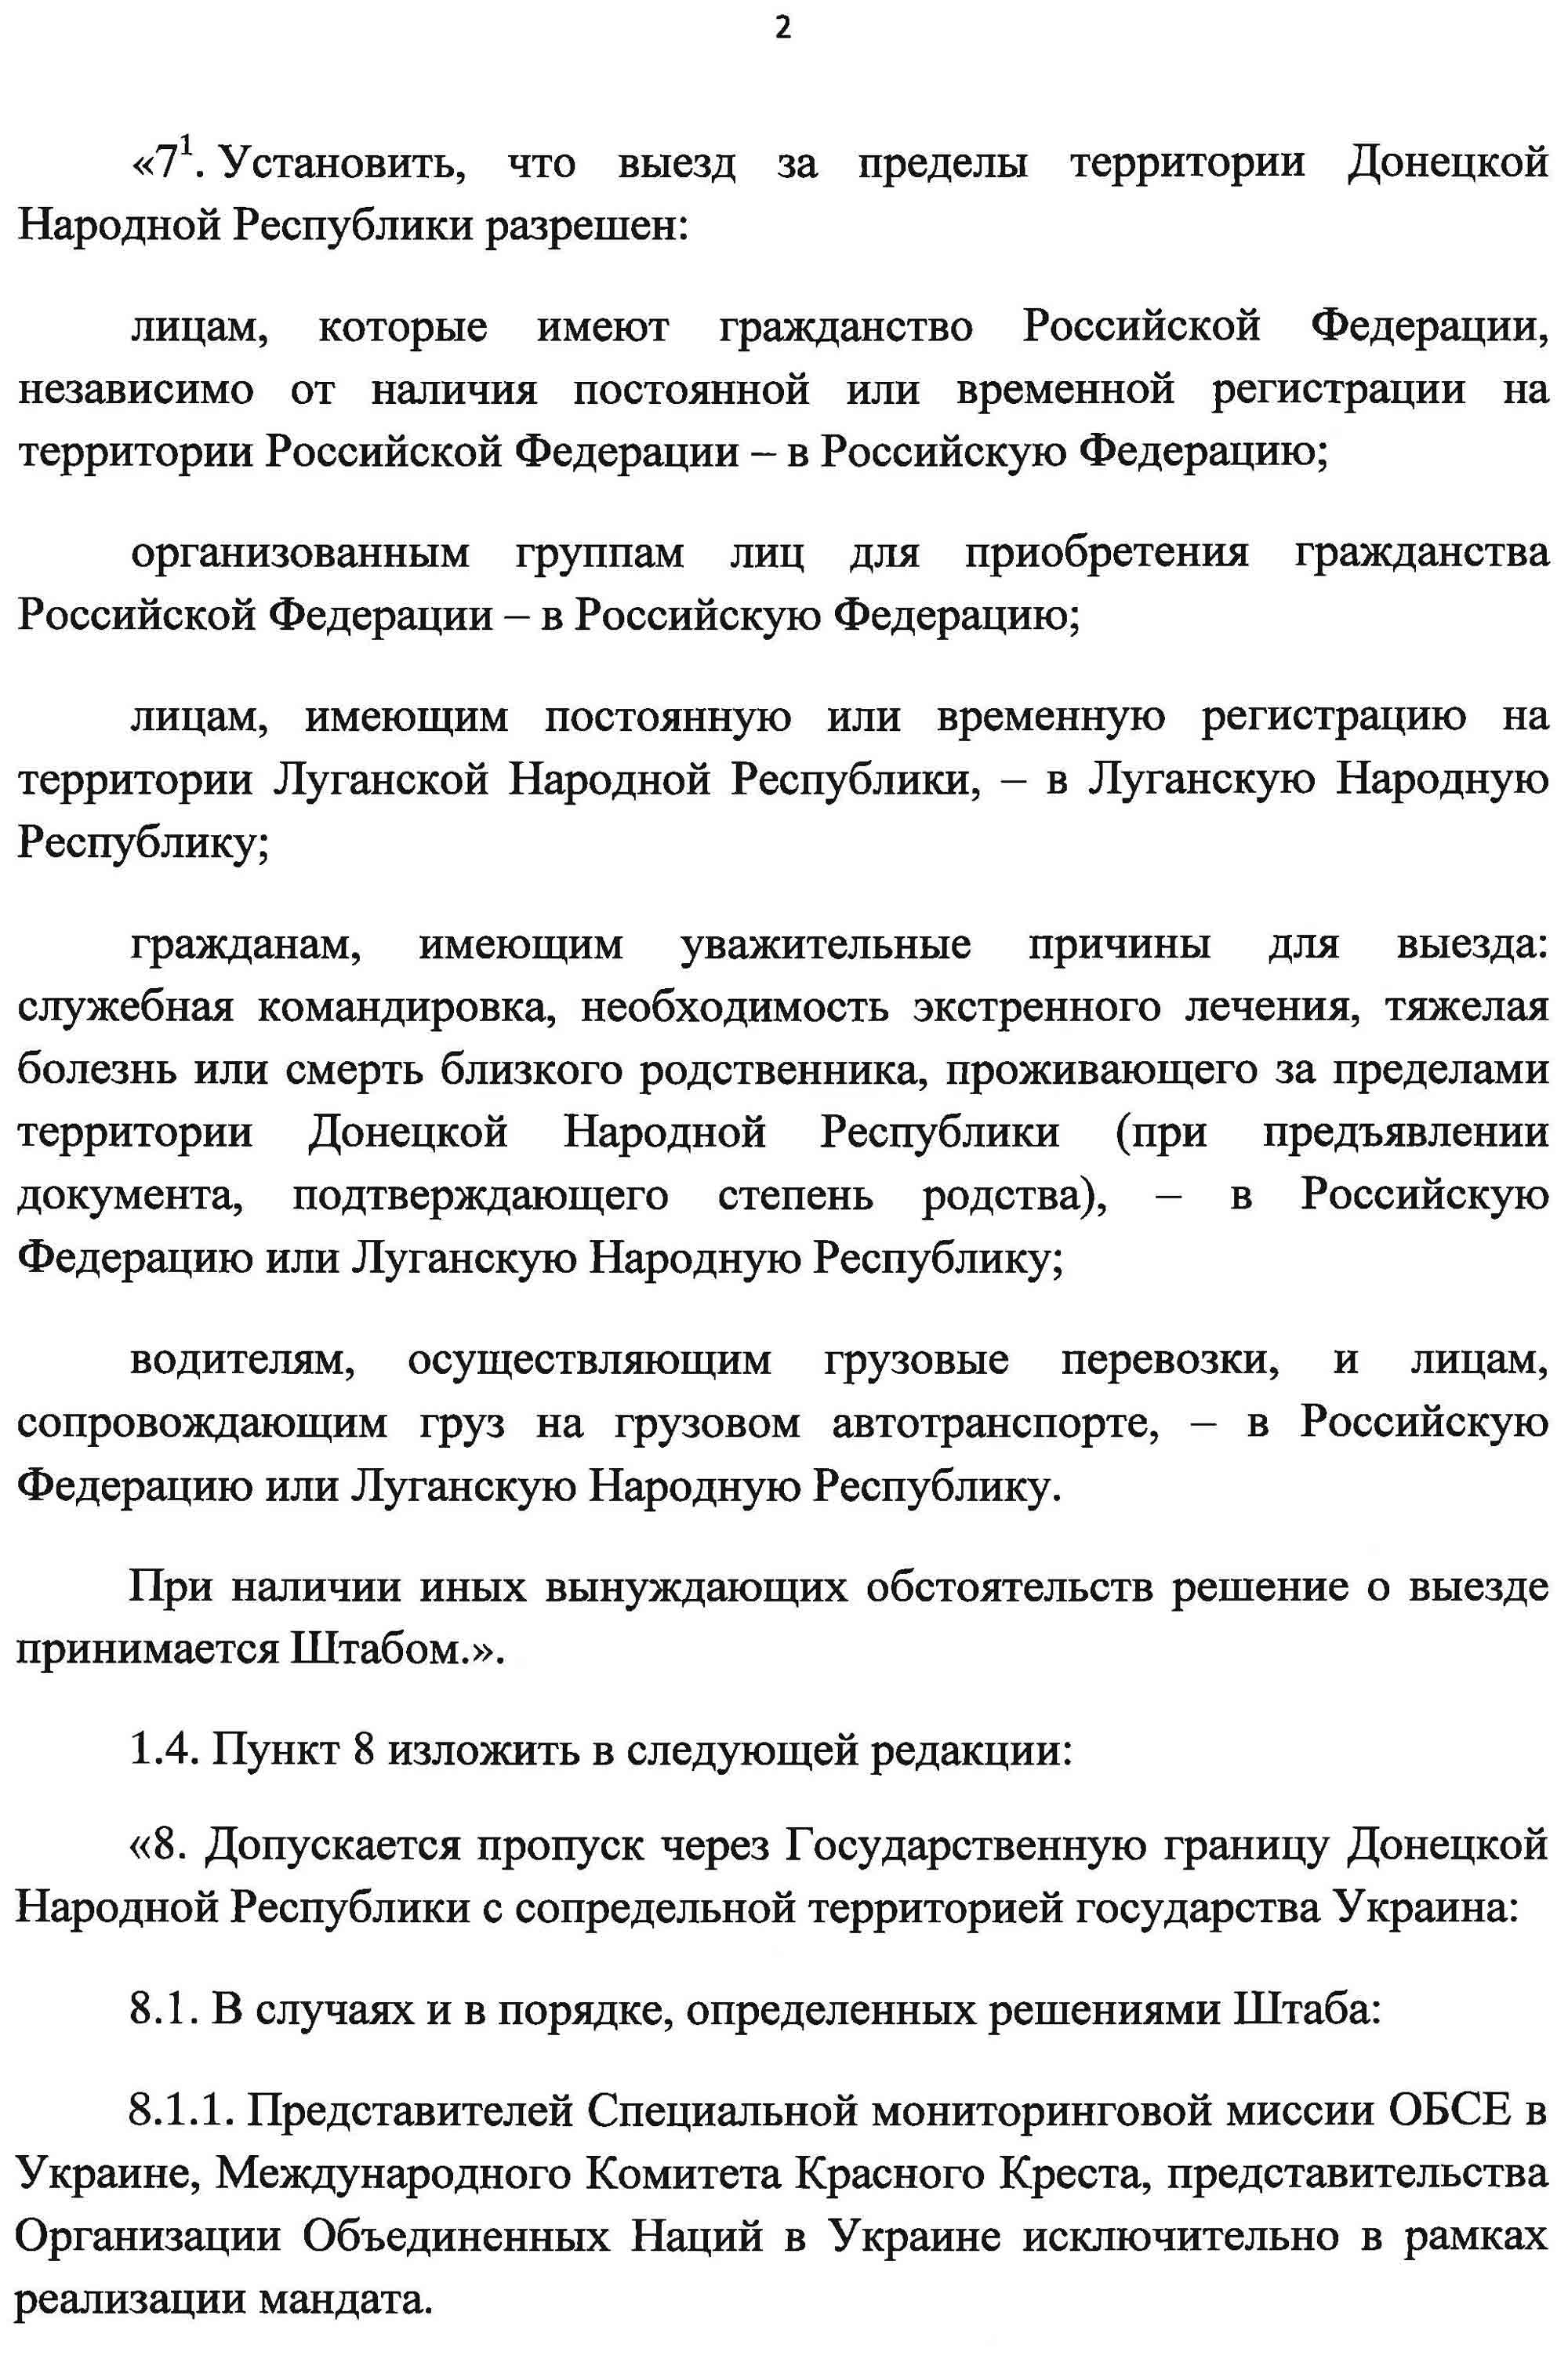 Глава ДНР Указом № 197 от 21 июня 2020 года